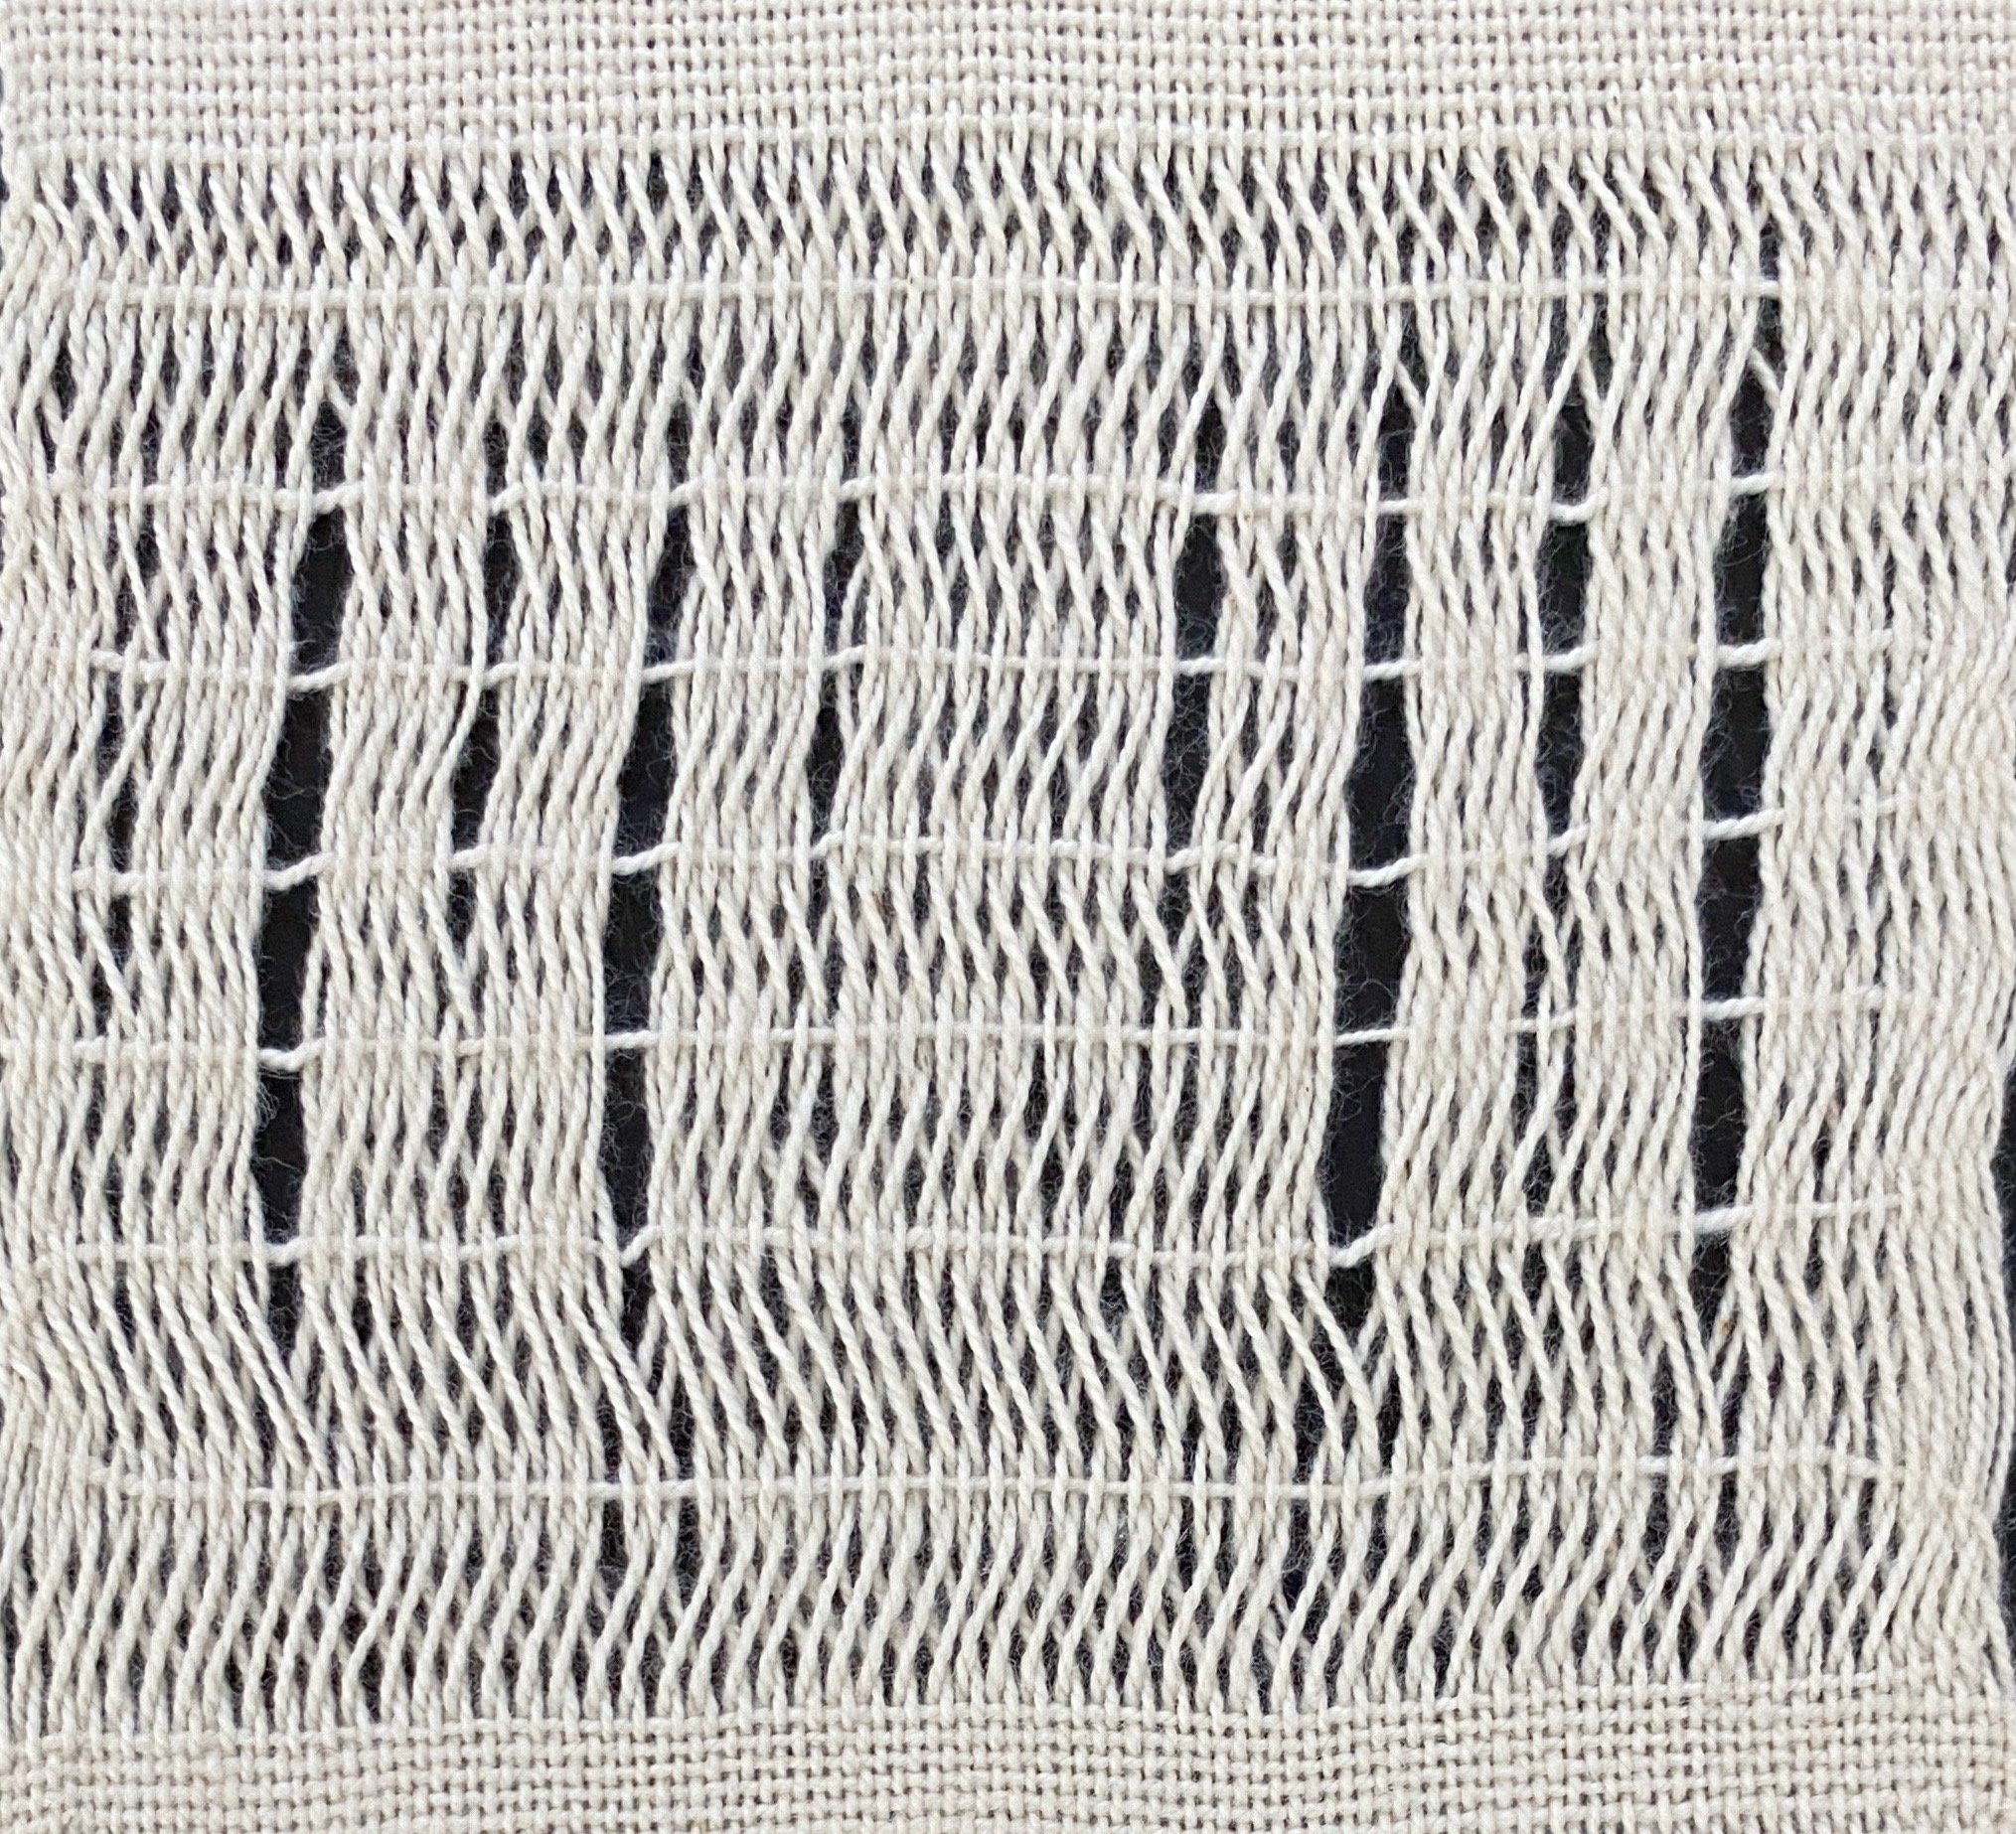 Hand-Manipulated Lace Weaving - Warped Fibers